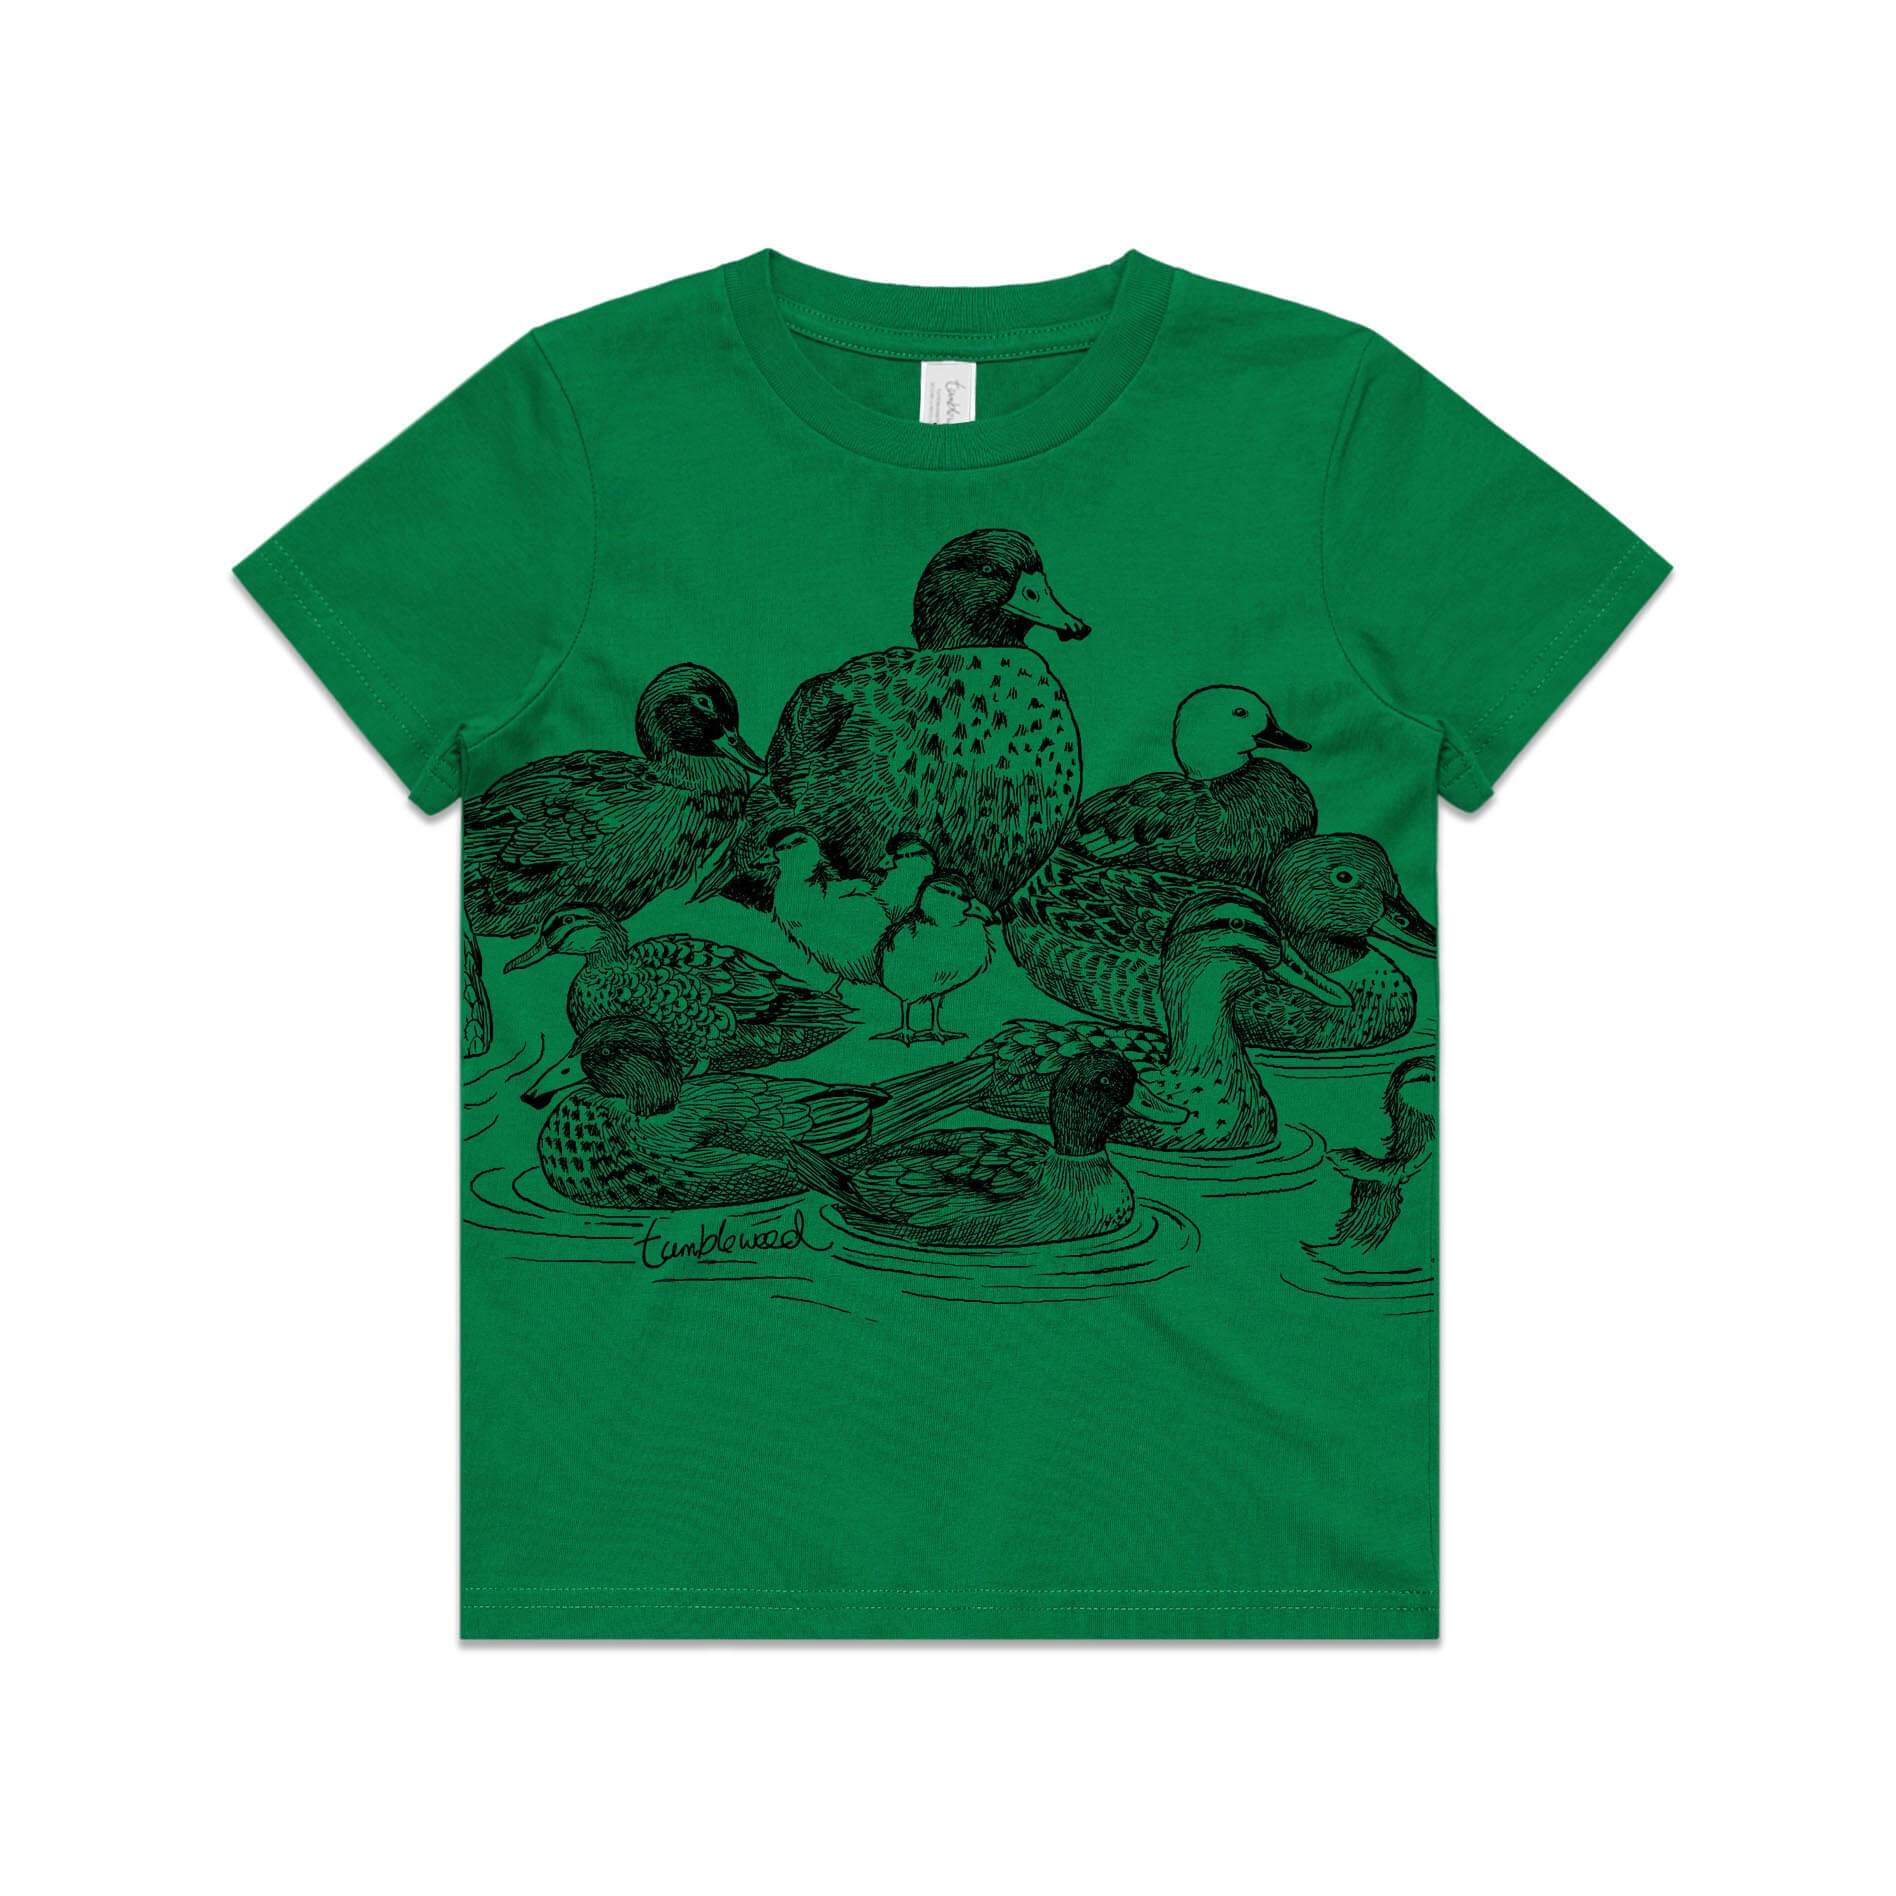 Green, cotton kids' t-shirt with screen printed ducks  design.